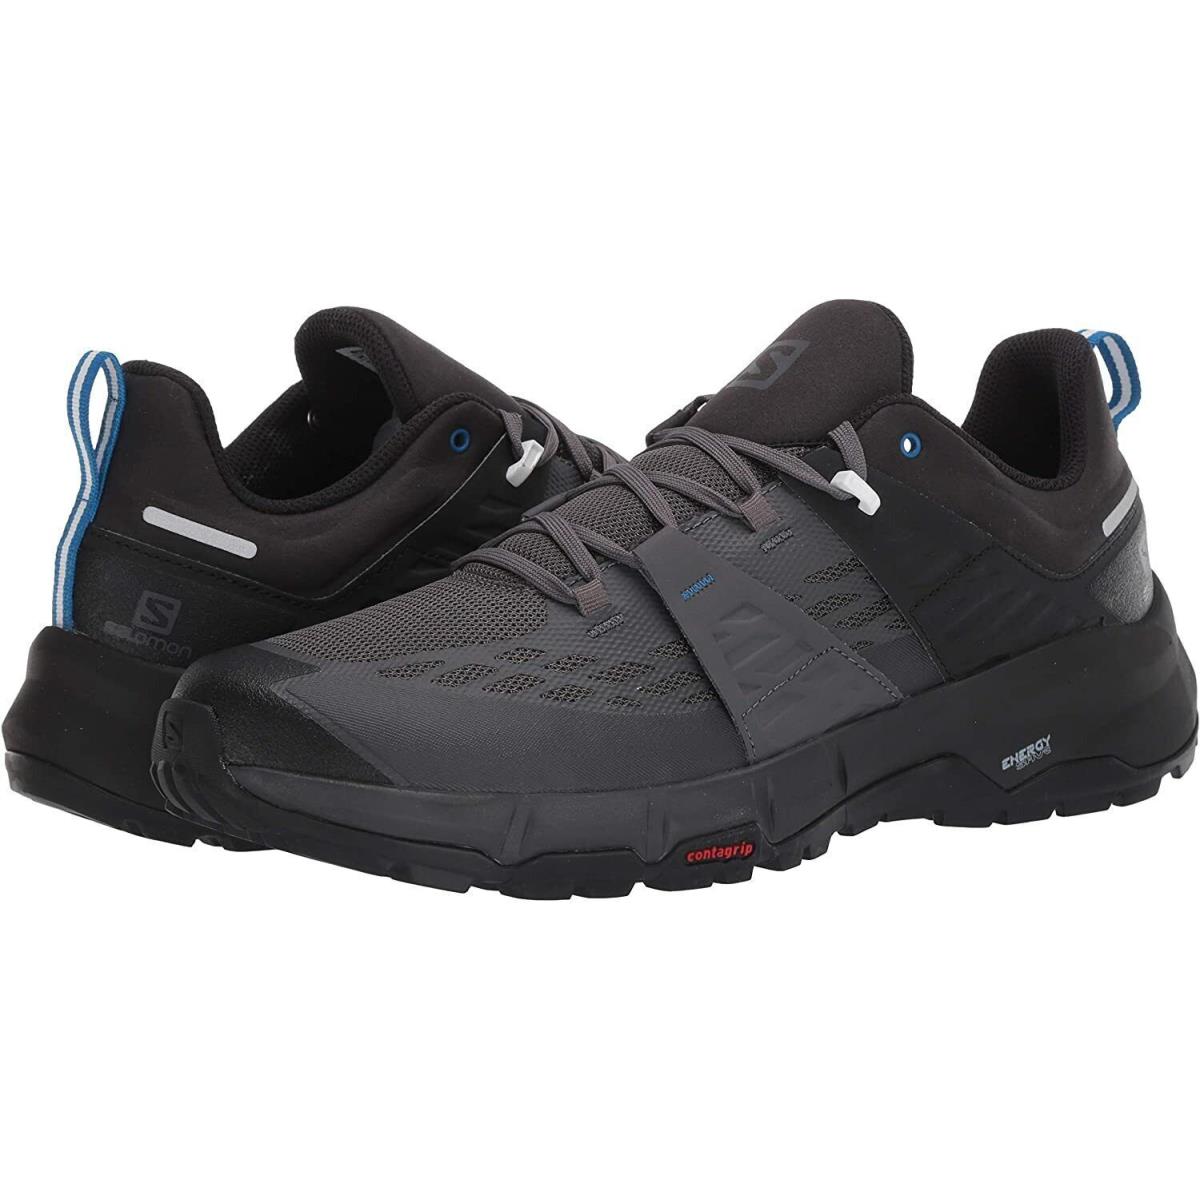 Salomon Odyssey Hiking Shoes Mens - Usa Size 11 - Black / Magnet / Imperial Blue